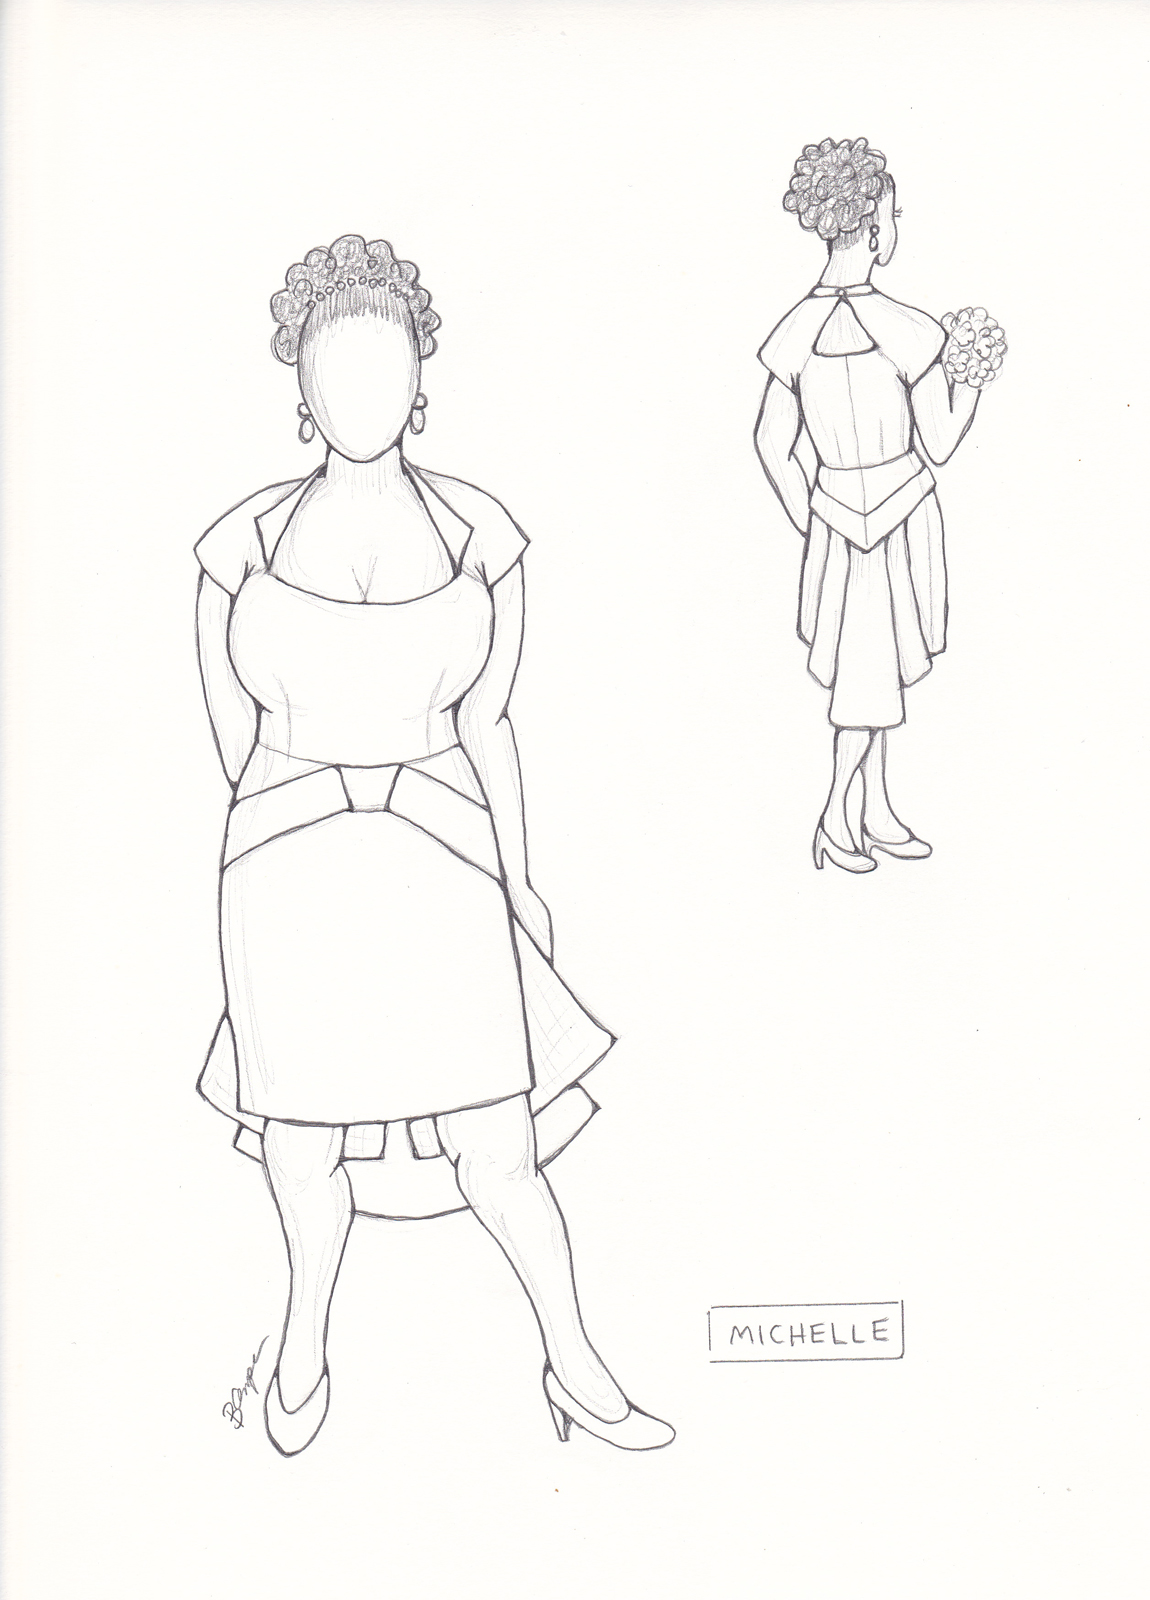 Michelle Sketch 2 copy